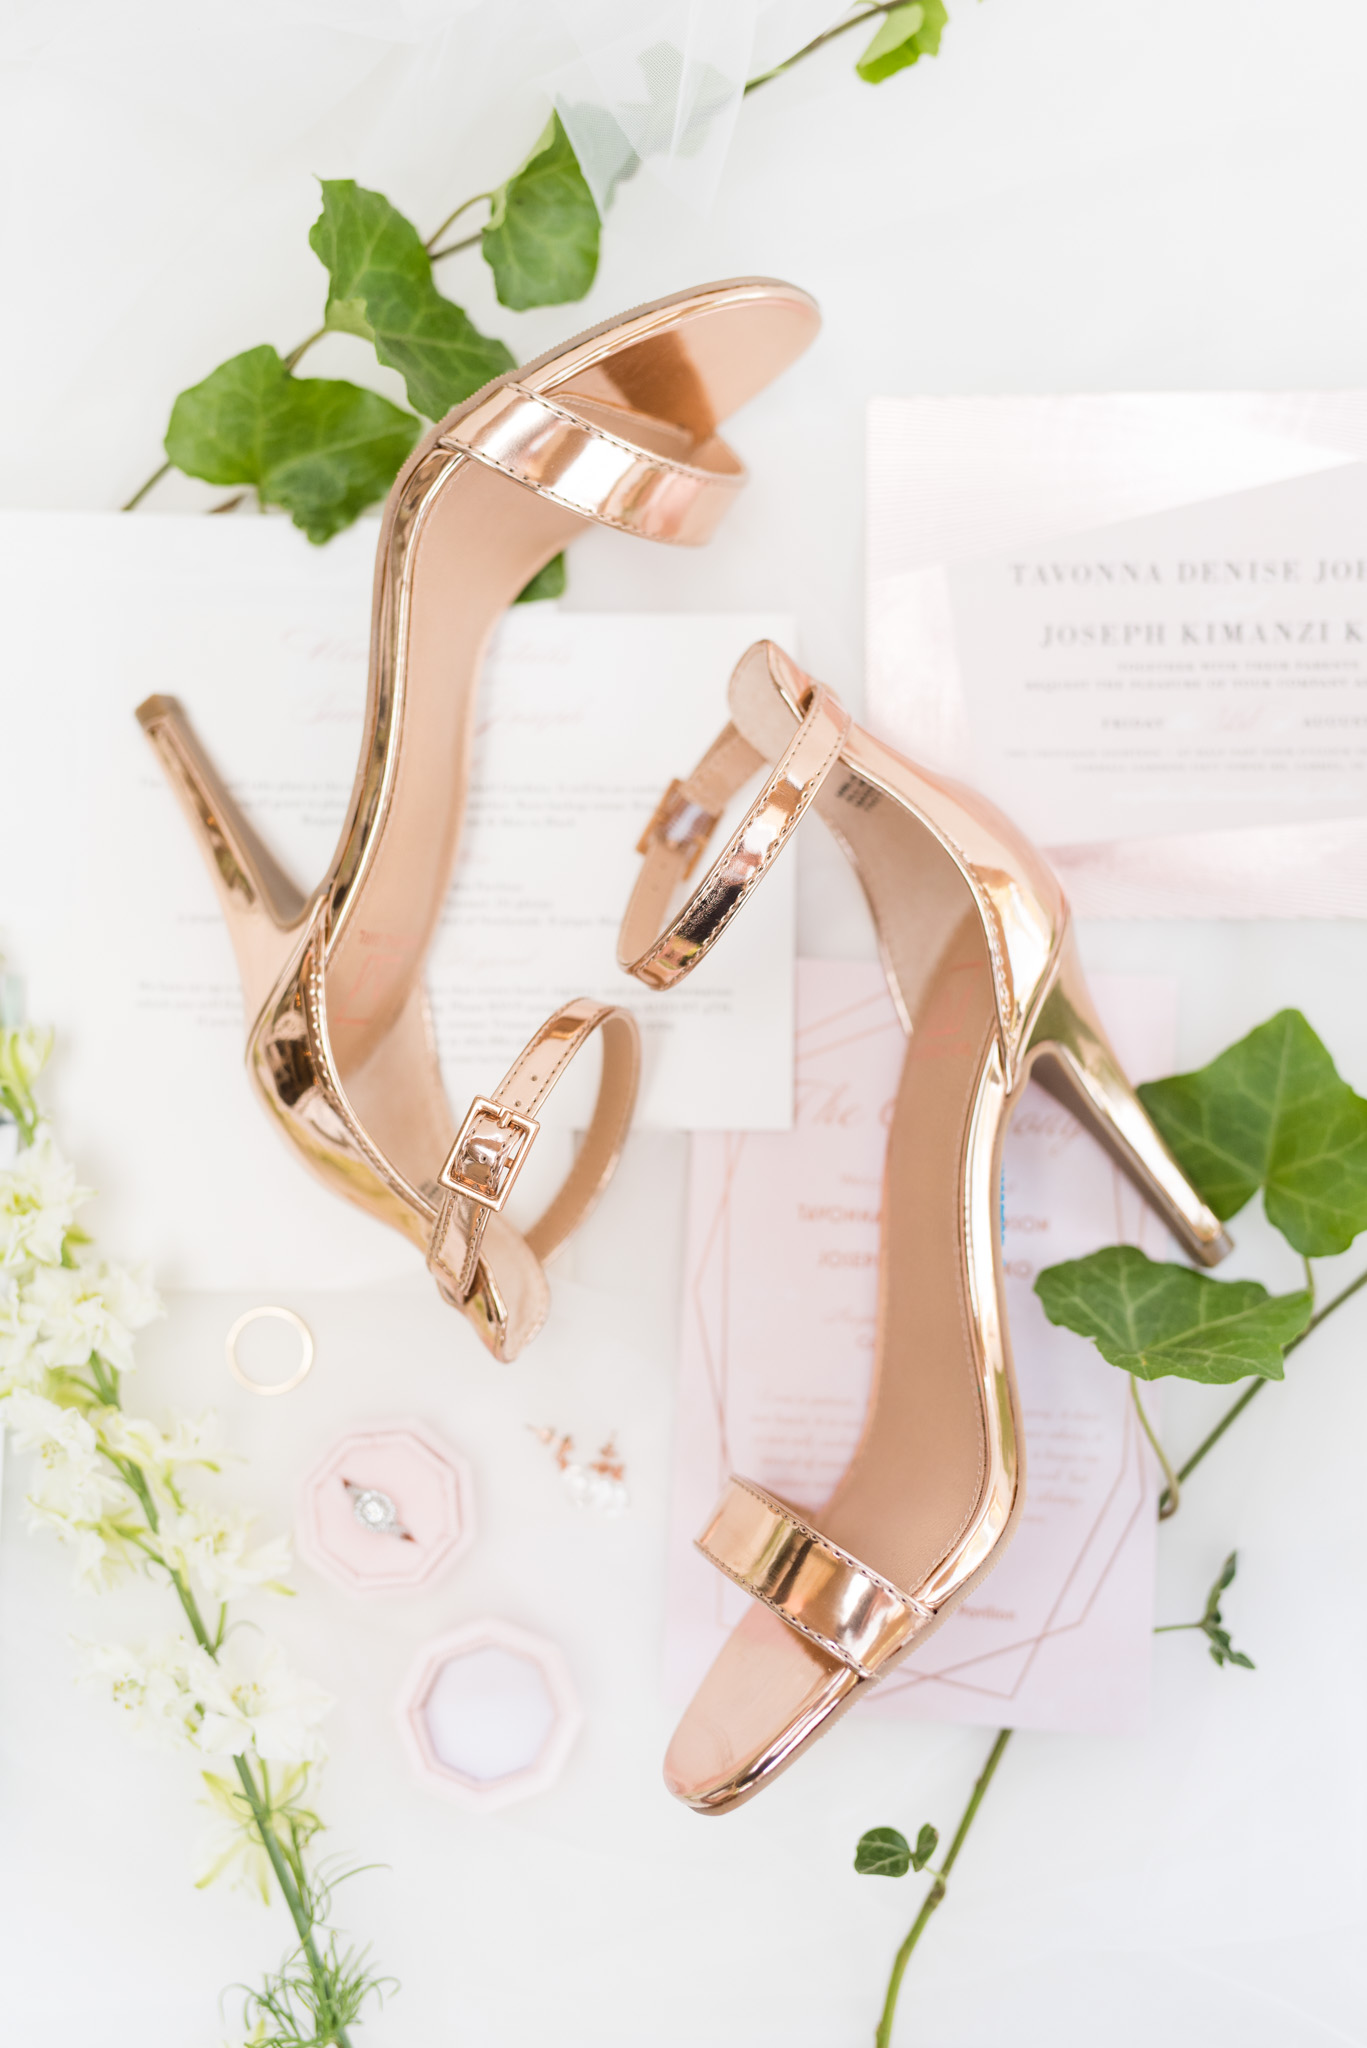 Rose gold heels sit on invitations.